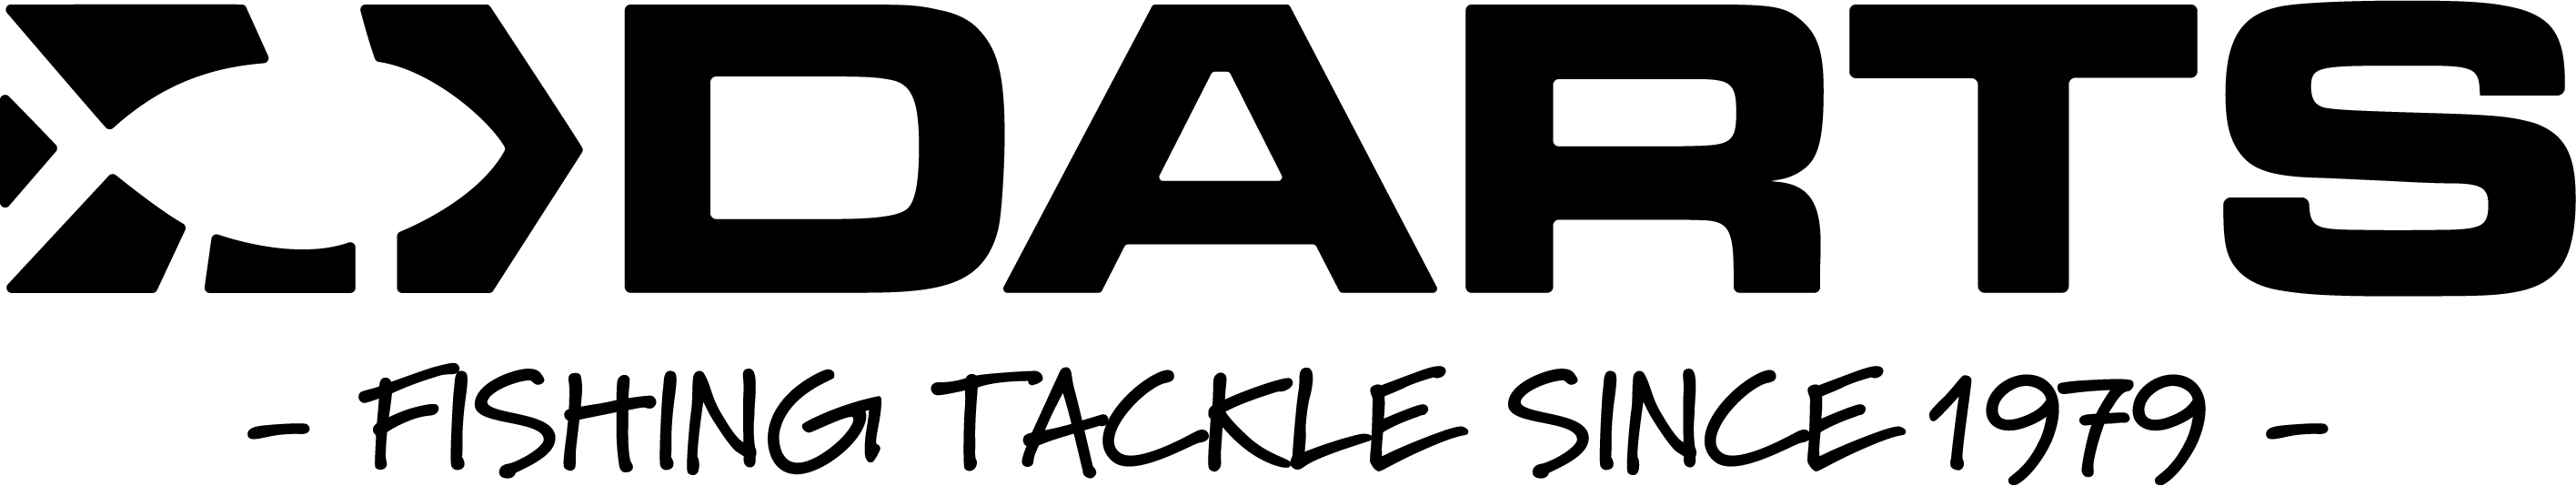 DARTS Logo 2020 Black